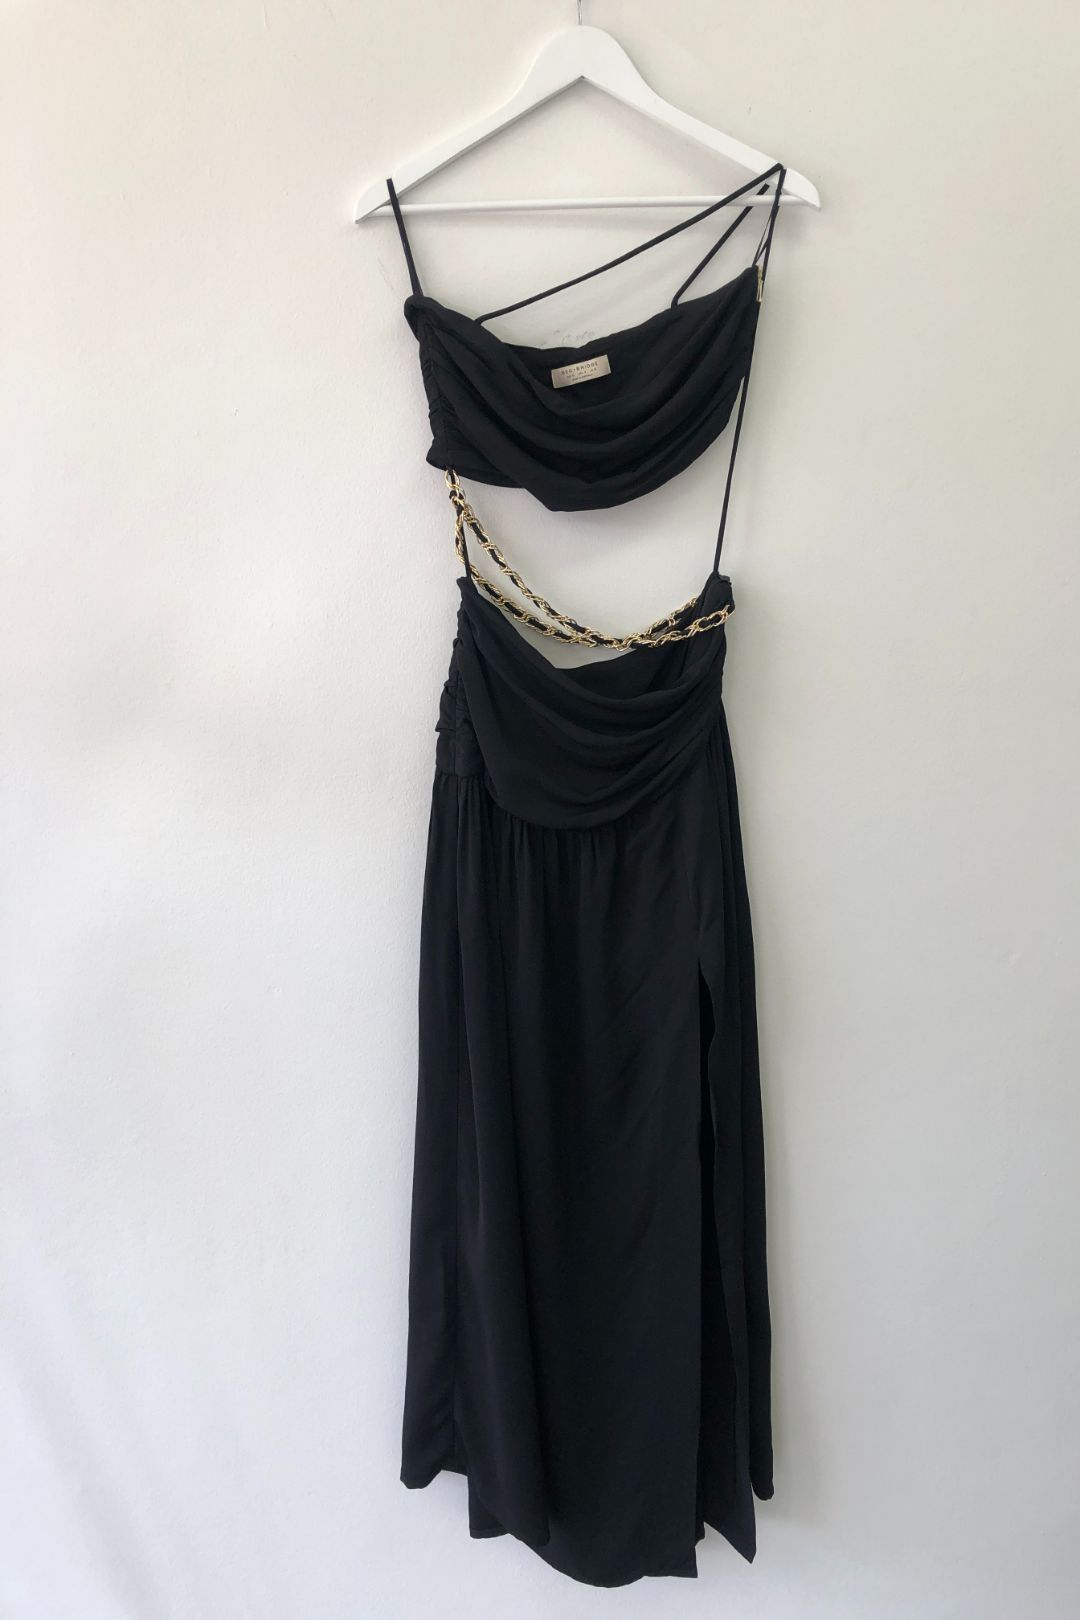 Bec and Bridge - Modern Romance Dress - Black